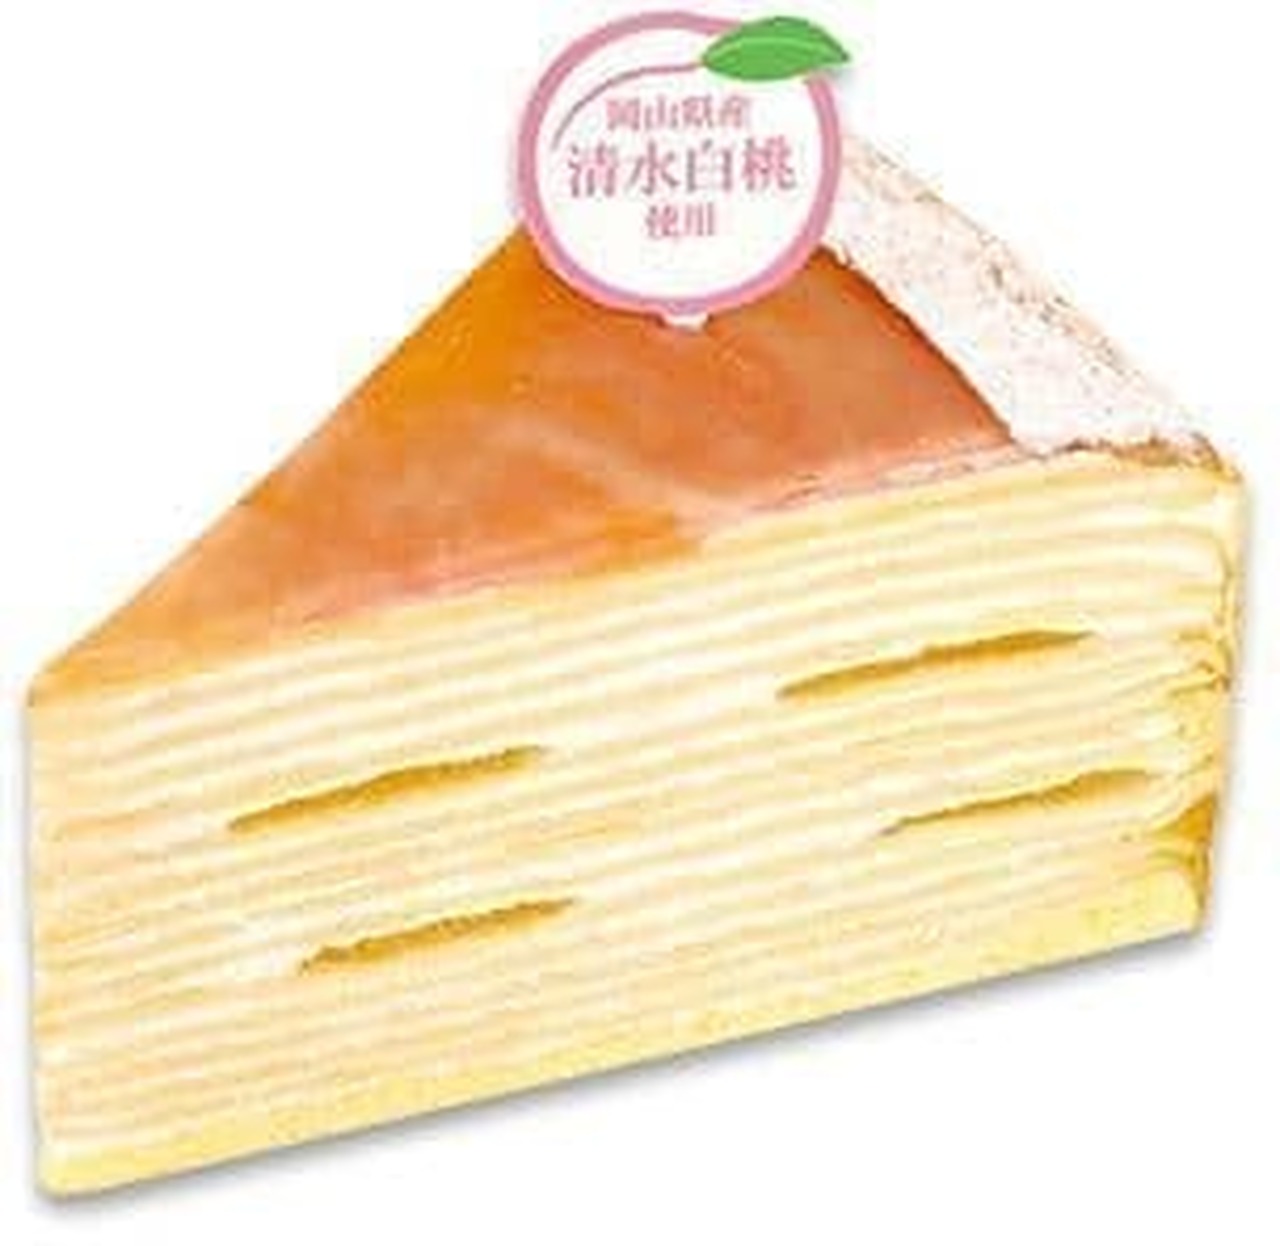 Fujiya pastry shop "Mille crêpes of Shimizu white peach from Okayama prefecture"